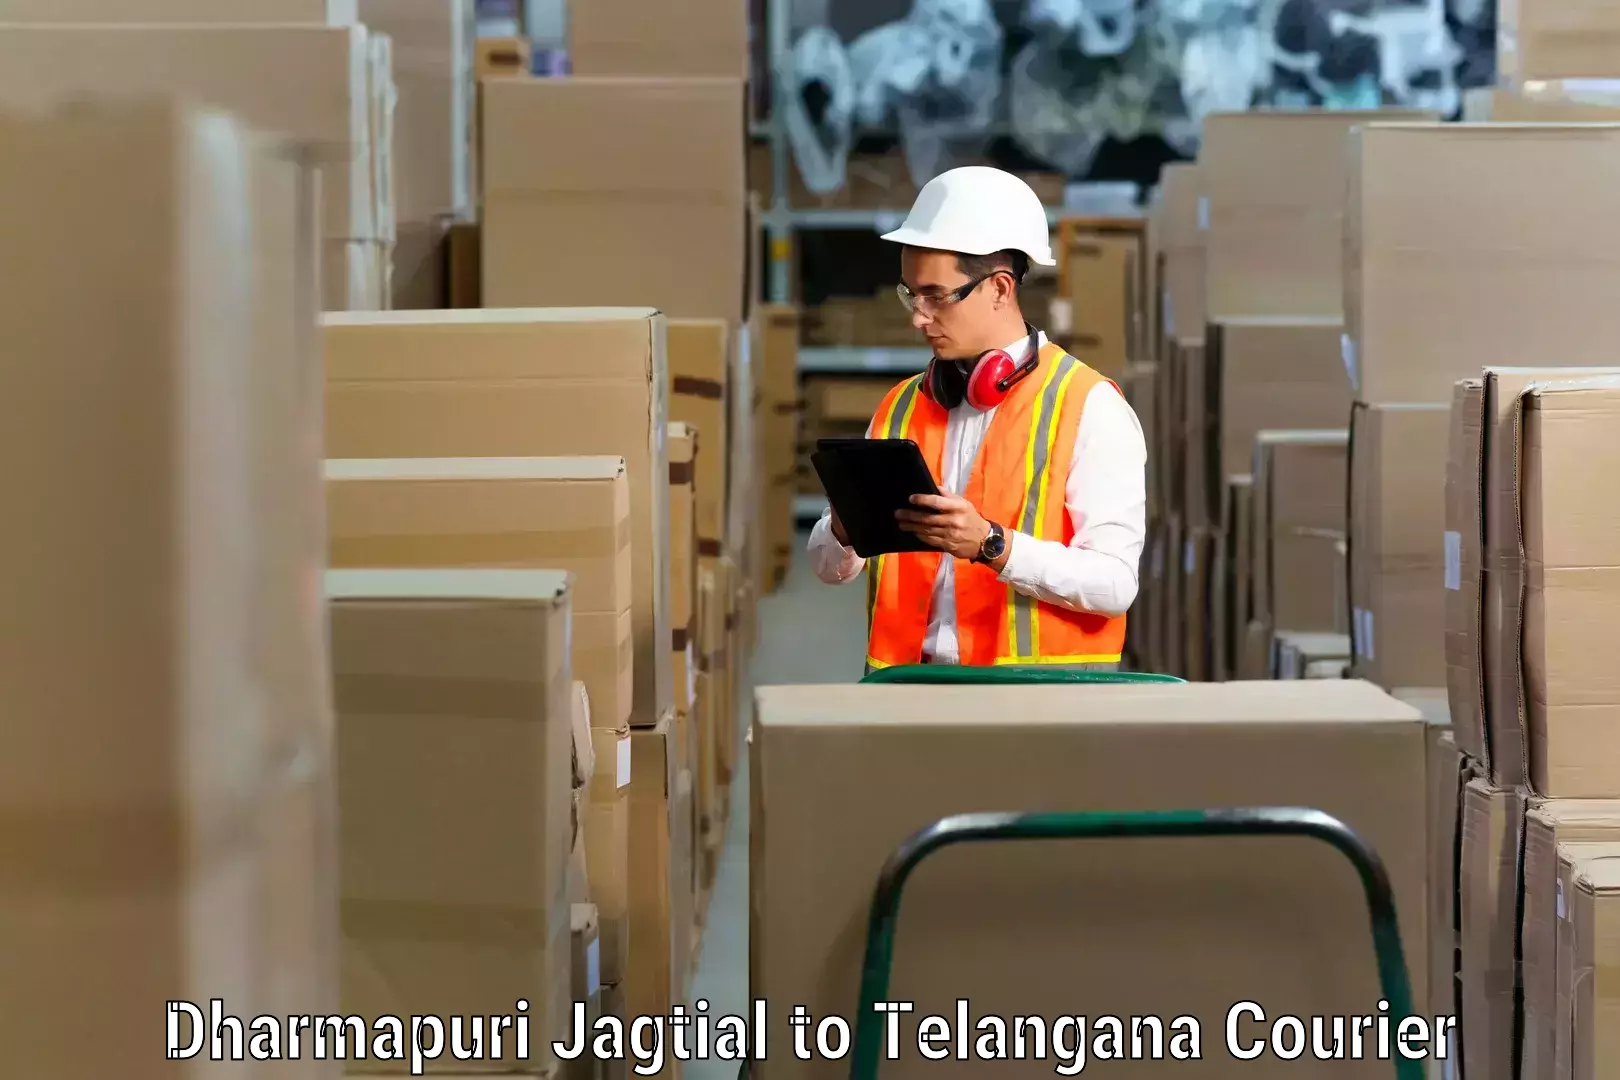 Furniture transport company Dharmapuri Jagtial to Aswaraopeta